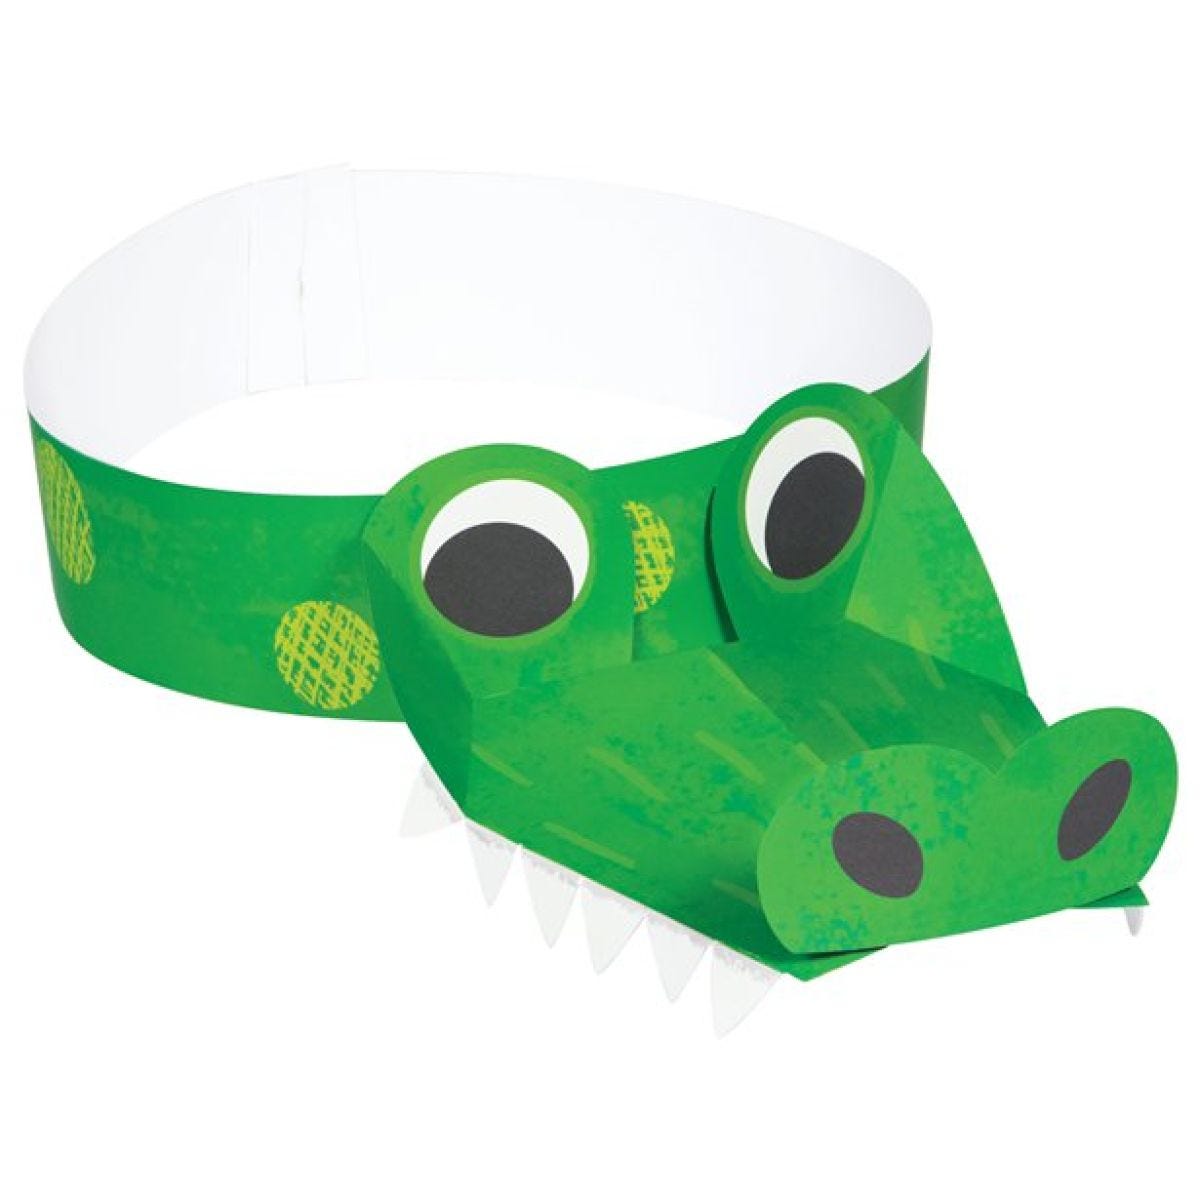 Alligator Party Shaped Headbands